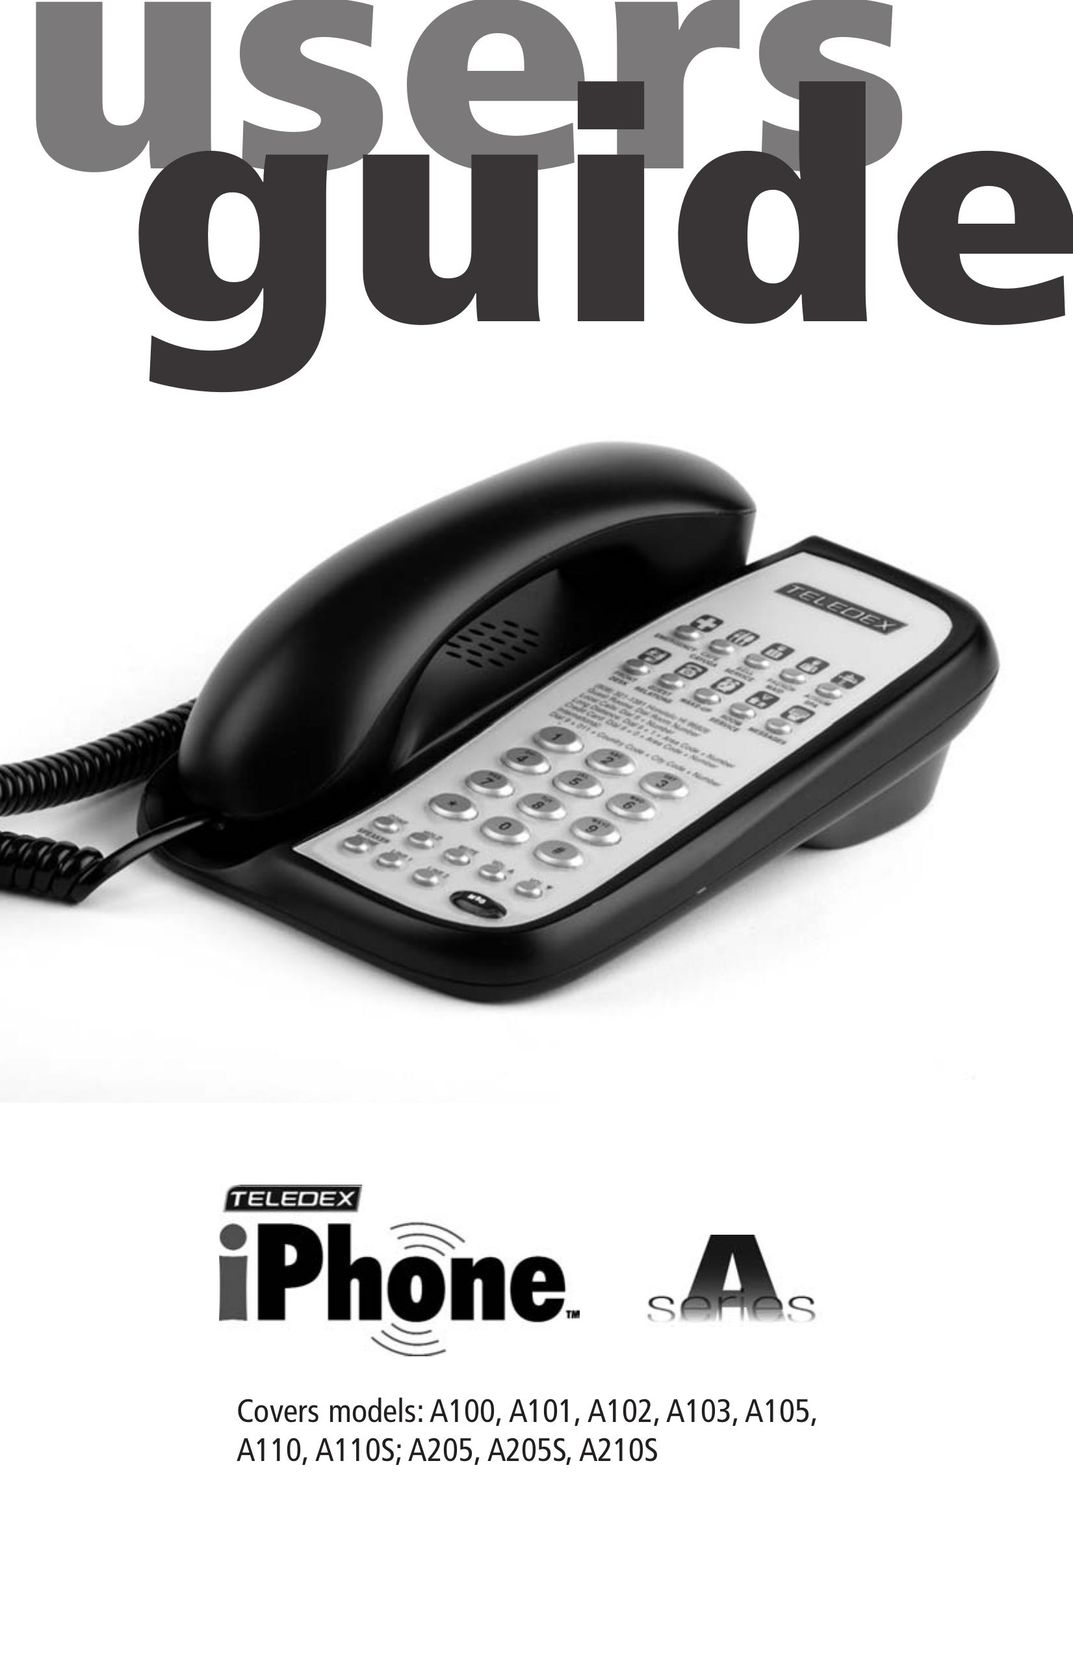 Teledex A100 Telephone User Manual